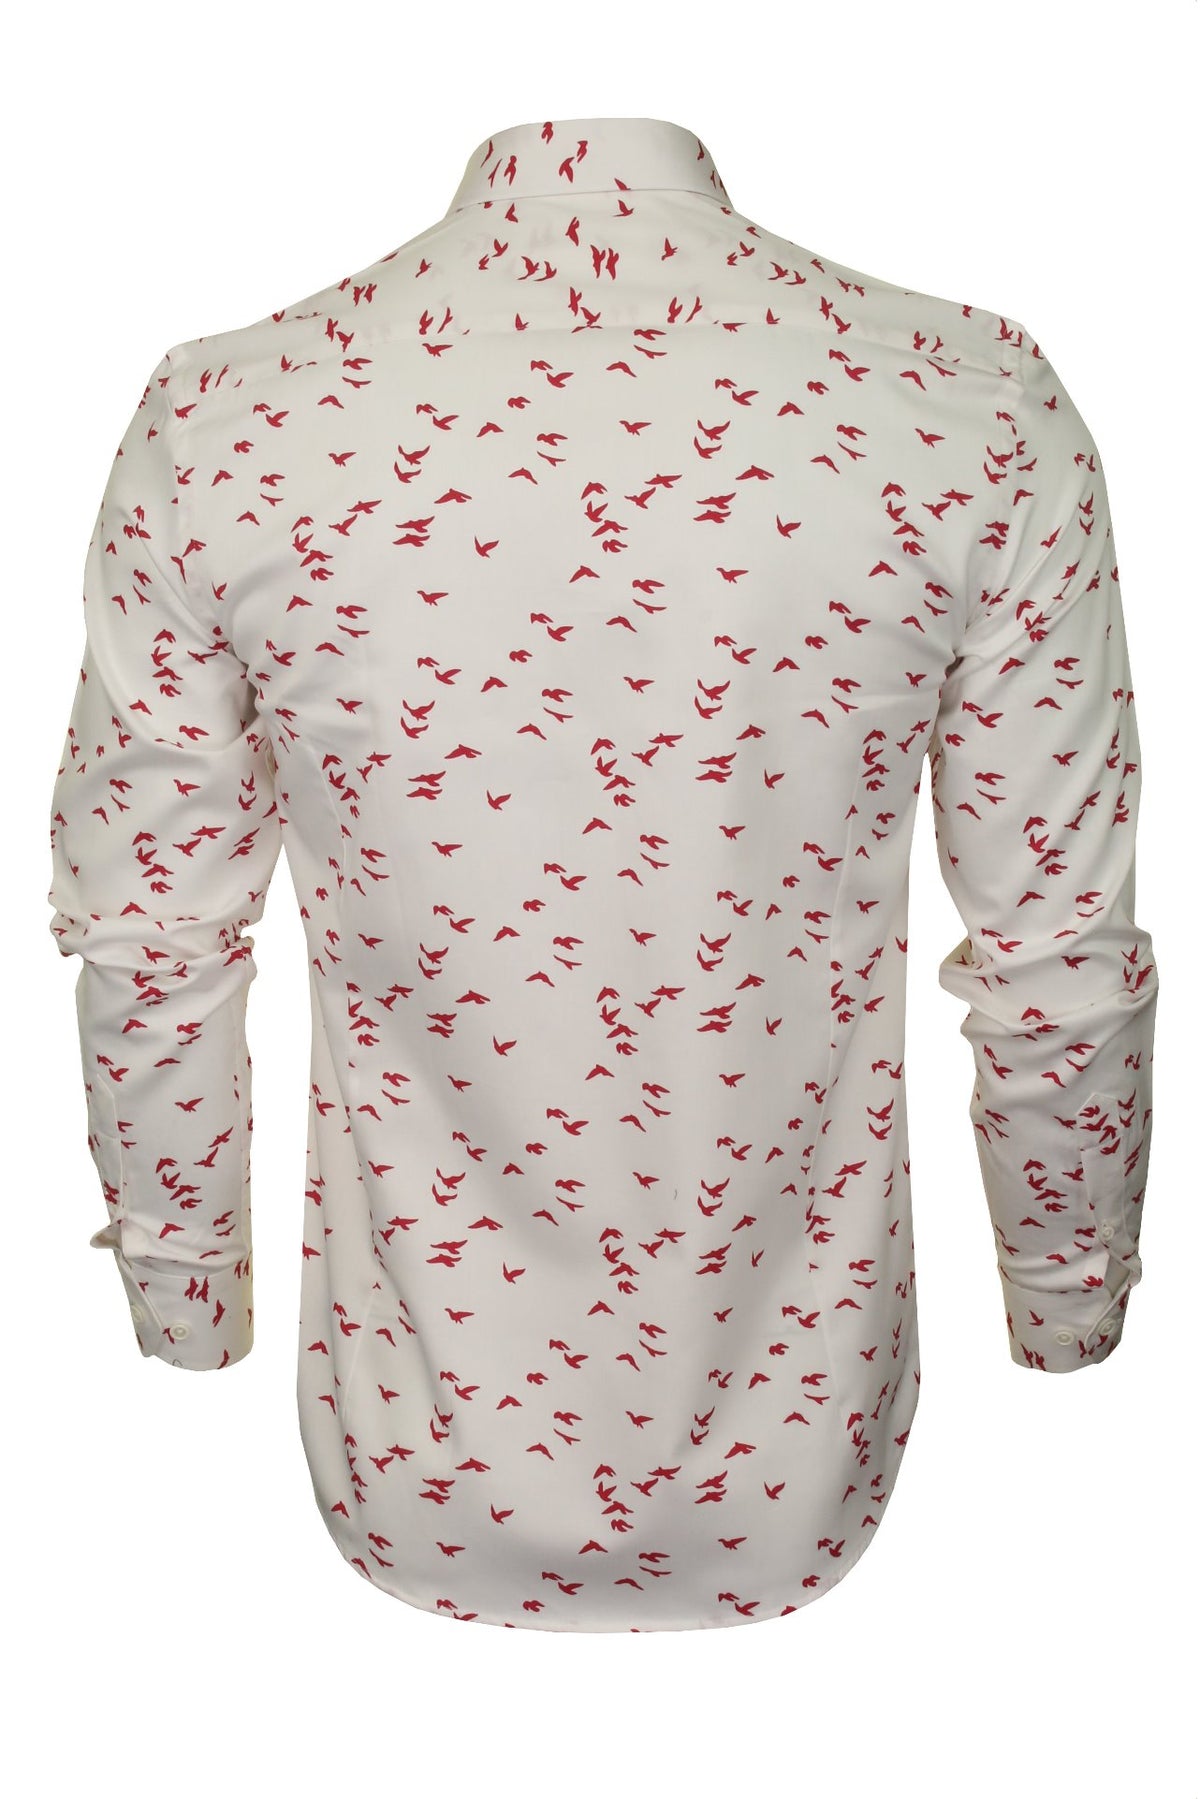 Xact Men's Cotton Bird Print Long Sleeved Shirt, 03, Xsh1083, White